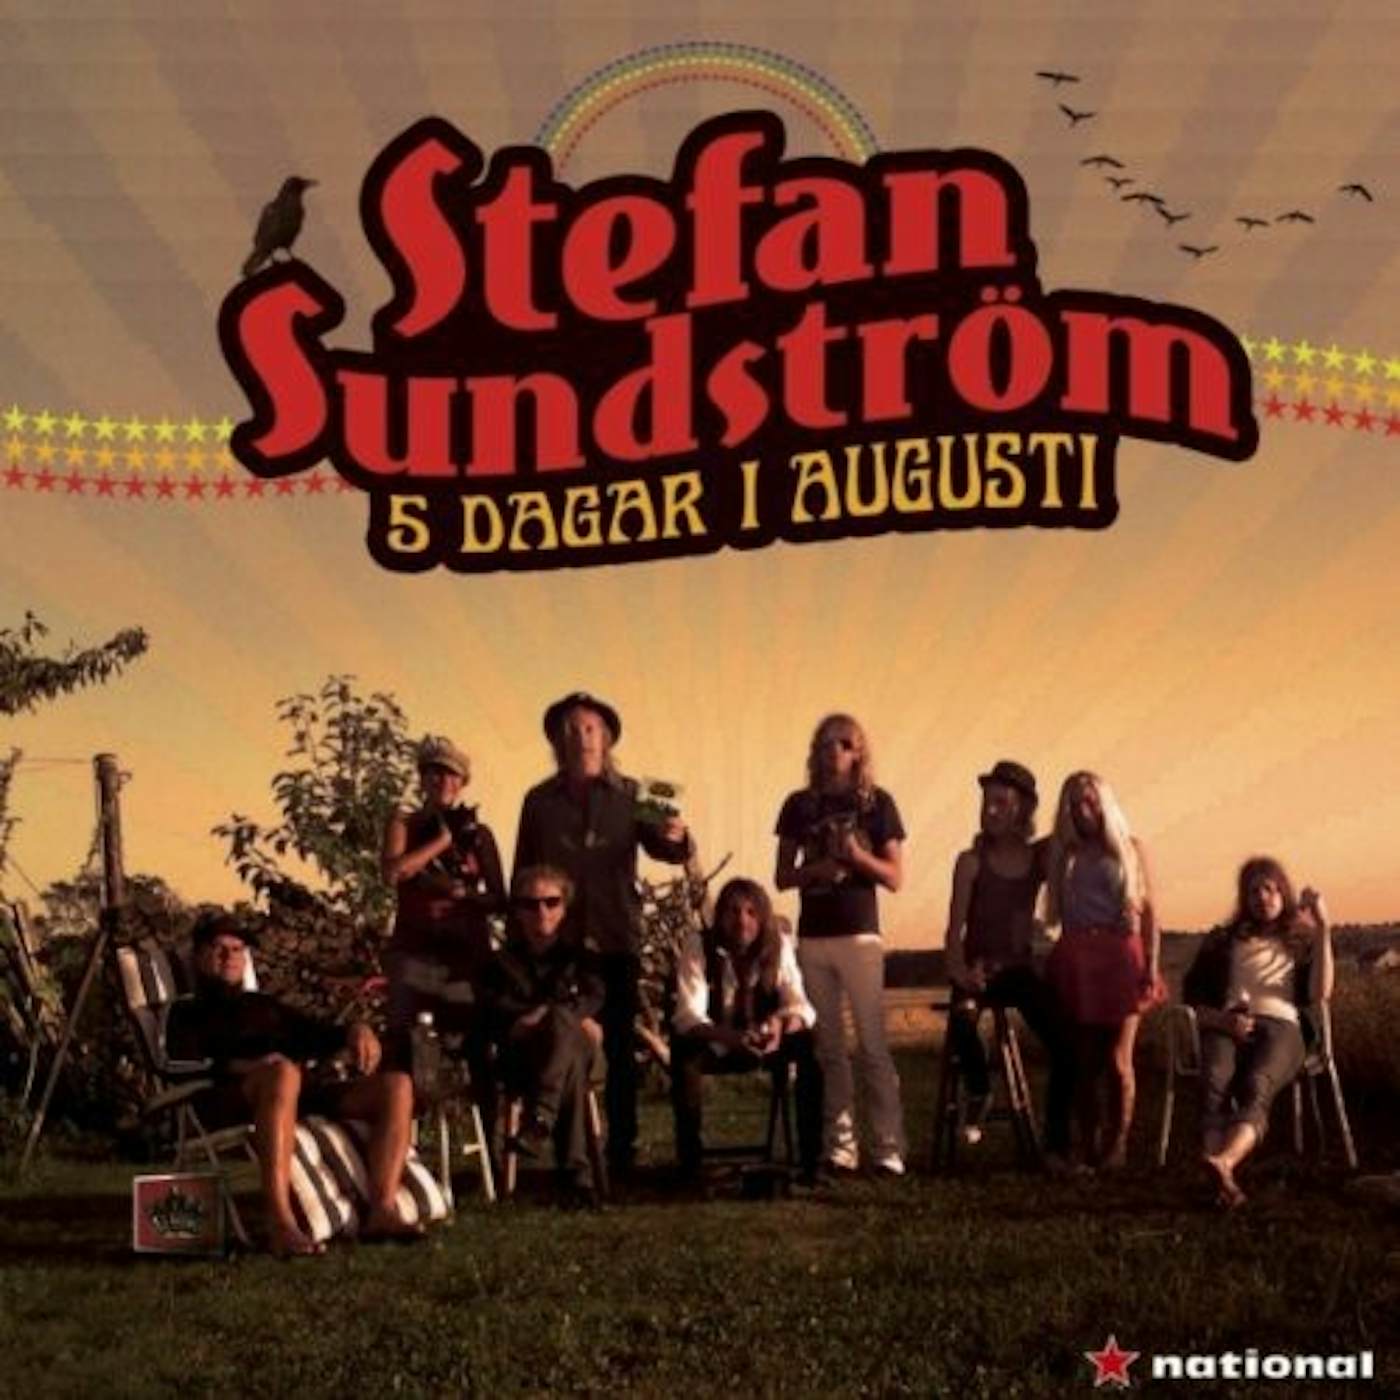 Stefan Sundström 5 DAGAR I AUGUSTI CD